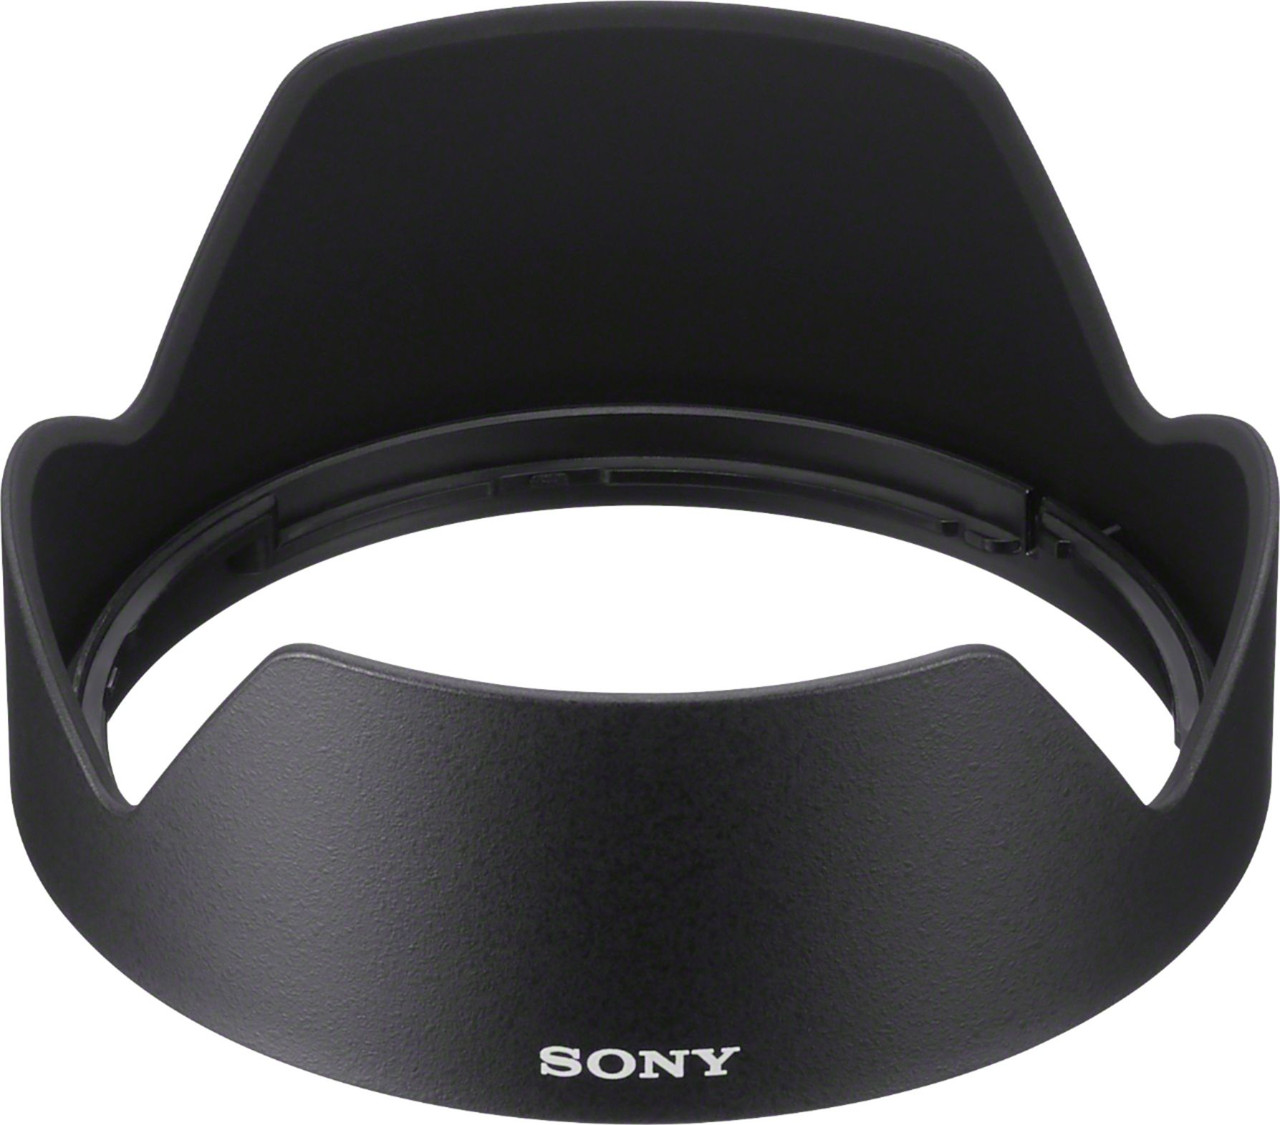 Sony - E 16-55mm F2.8 G Standard Zoom Lens for Sony E-mount Cameras